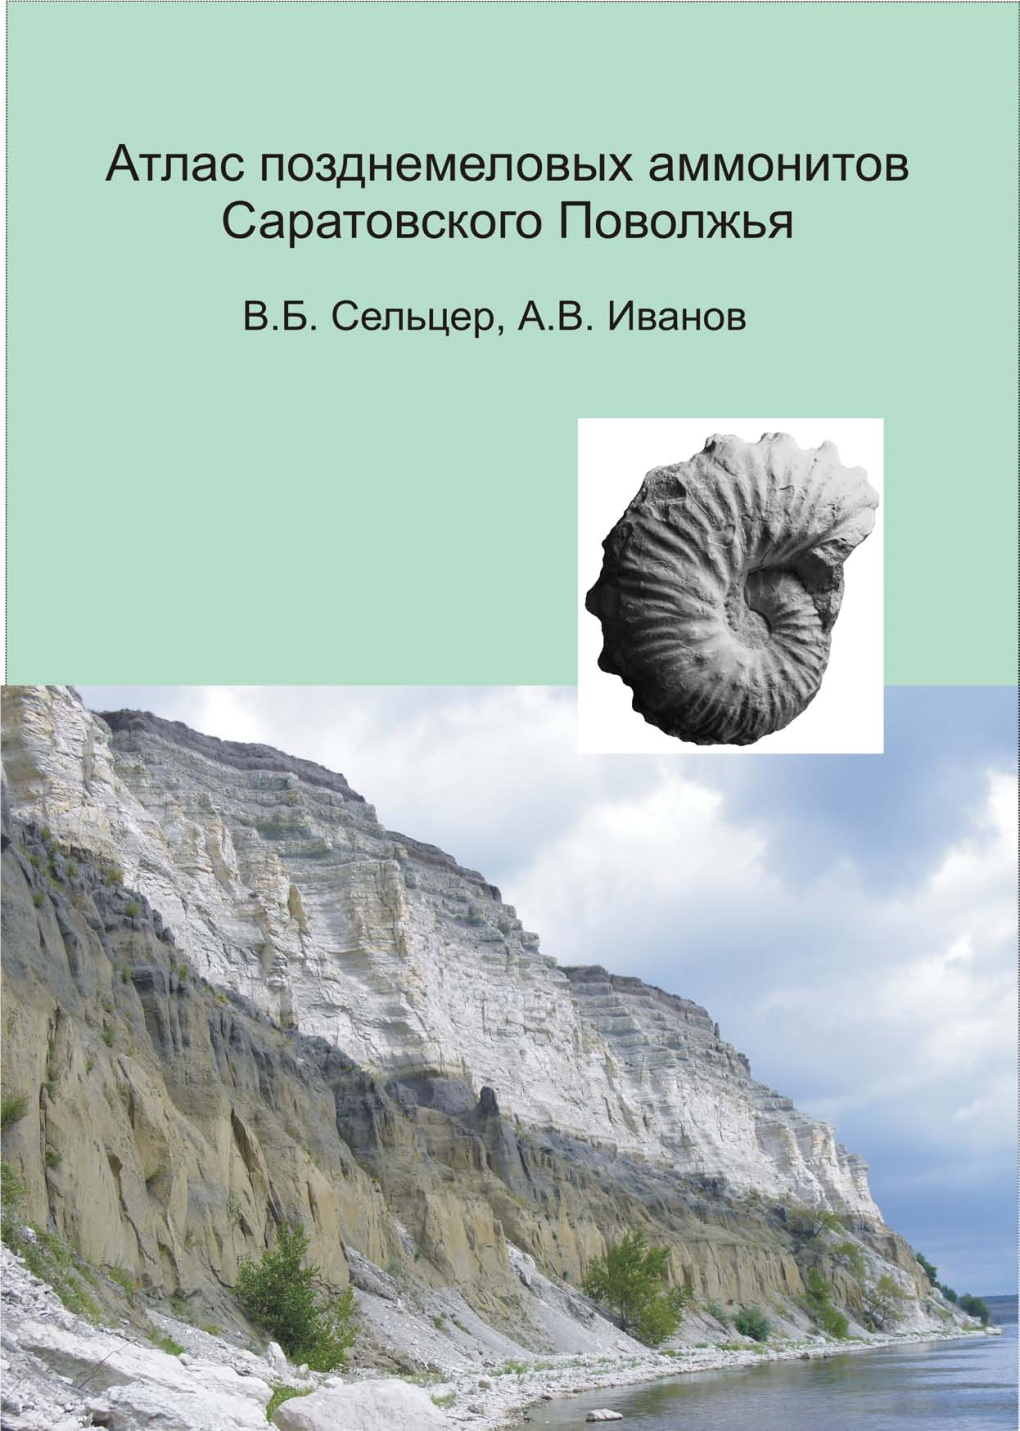 Seltcer,Ivanov,2010 K2 Ammonites